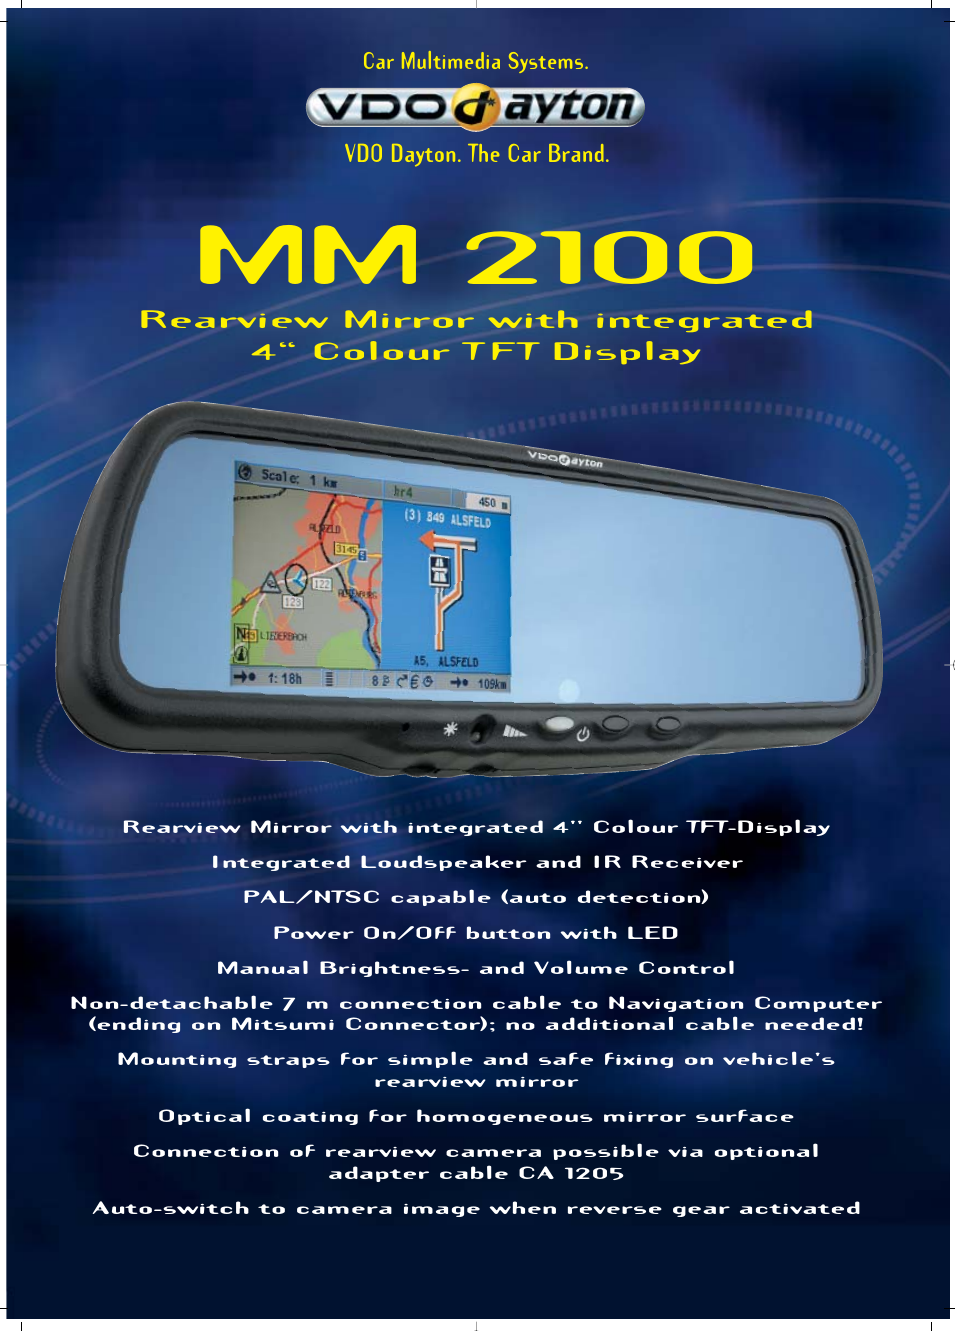 Rearview Mirror MM 2100